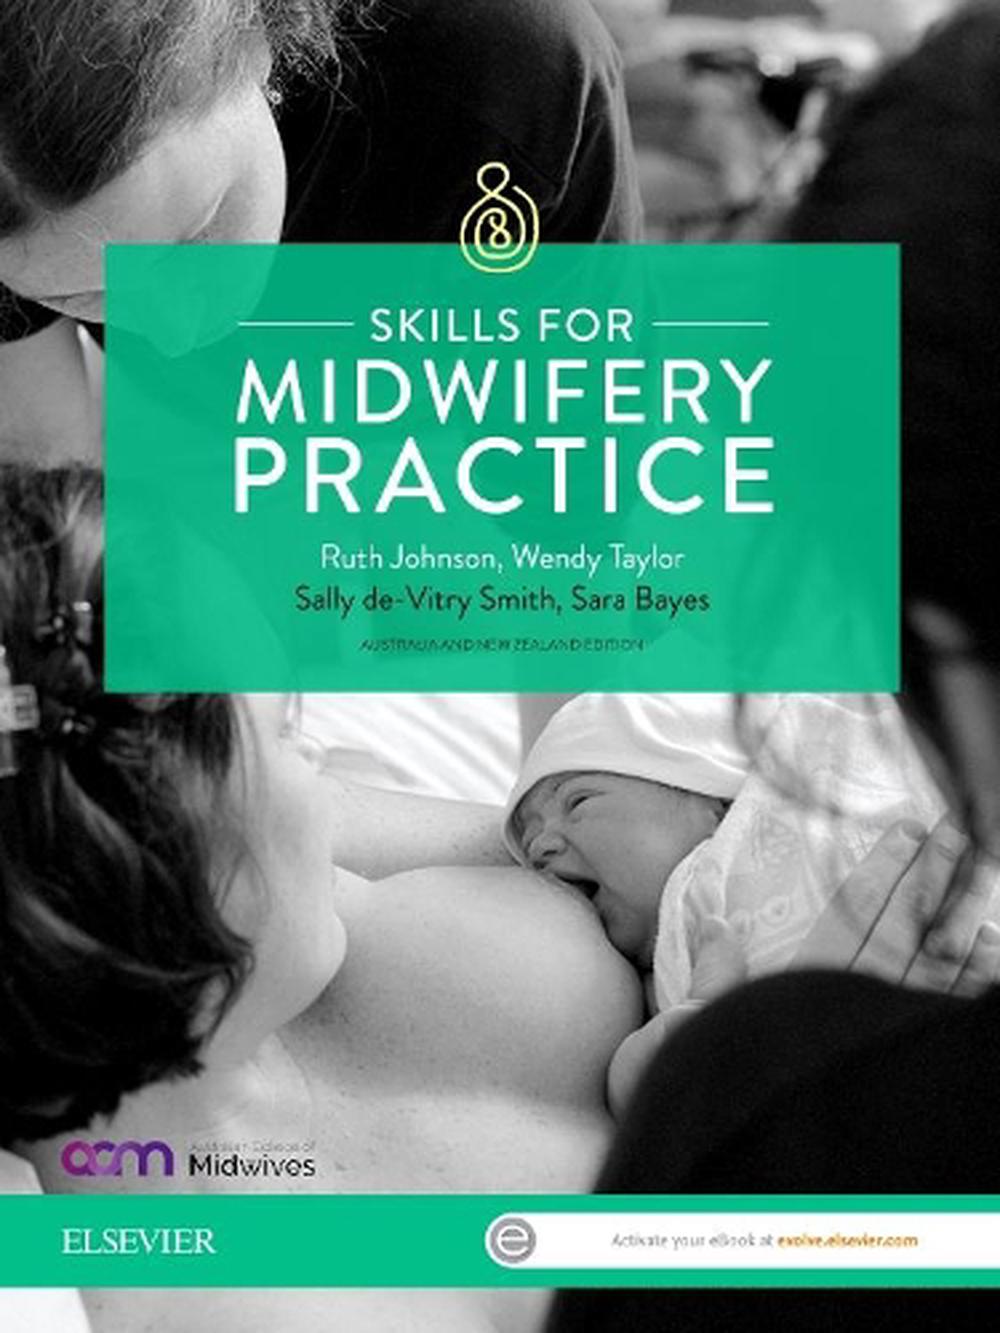 dissertation in midwifery